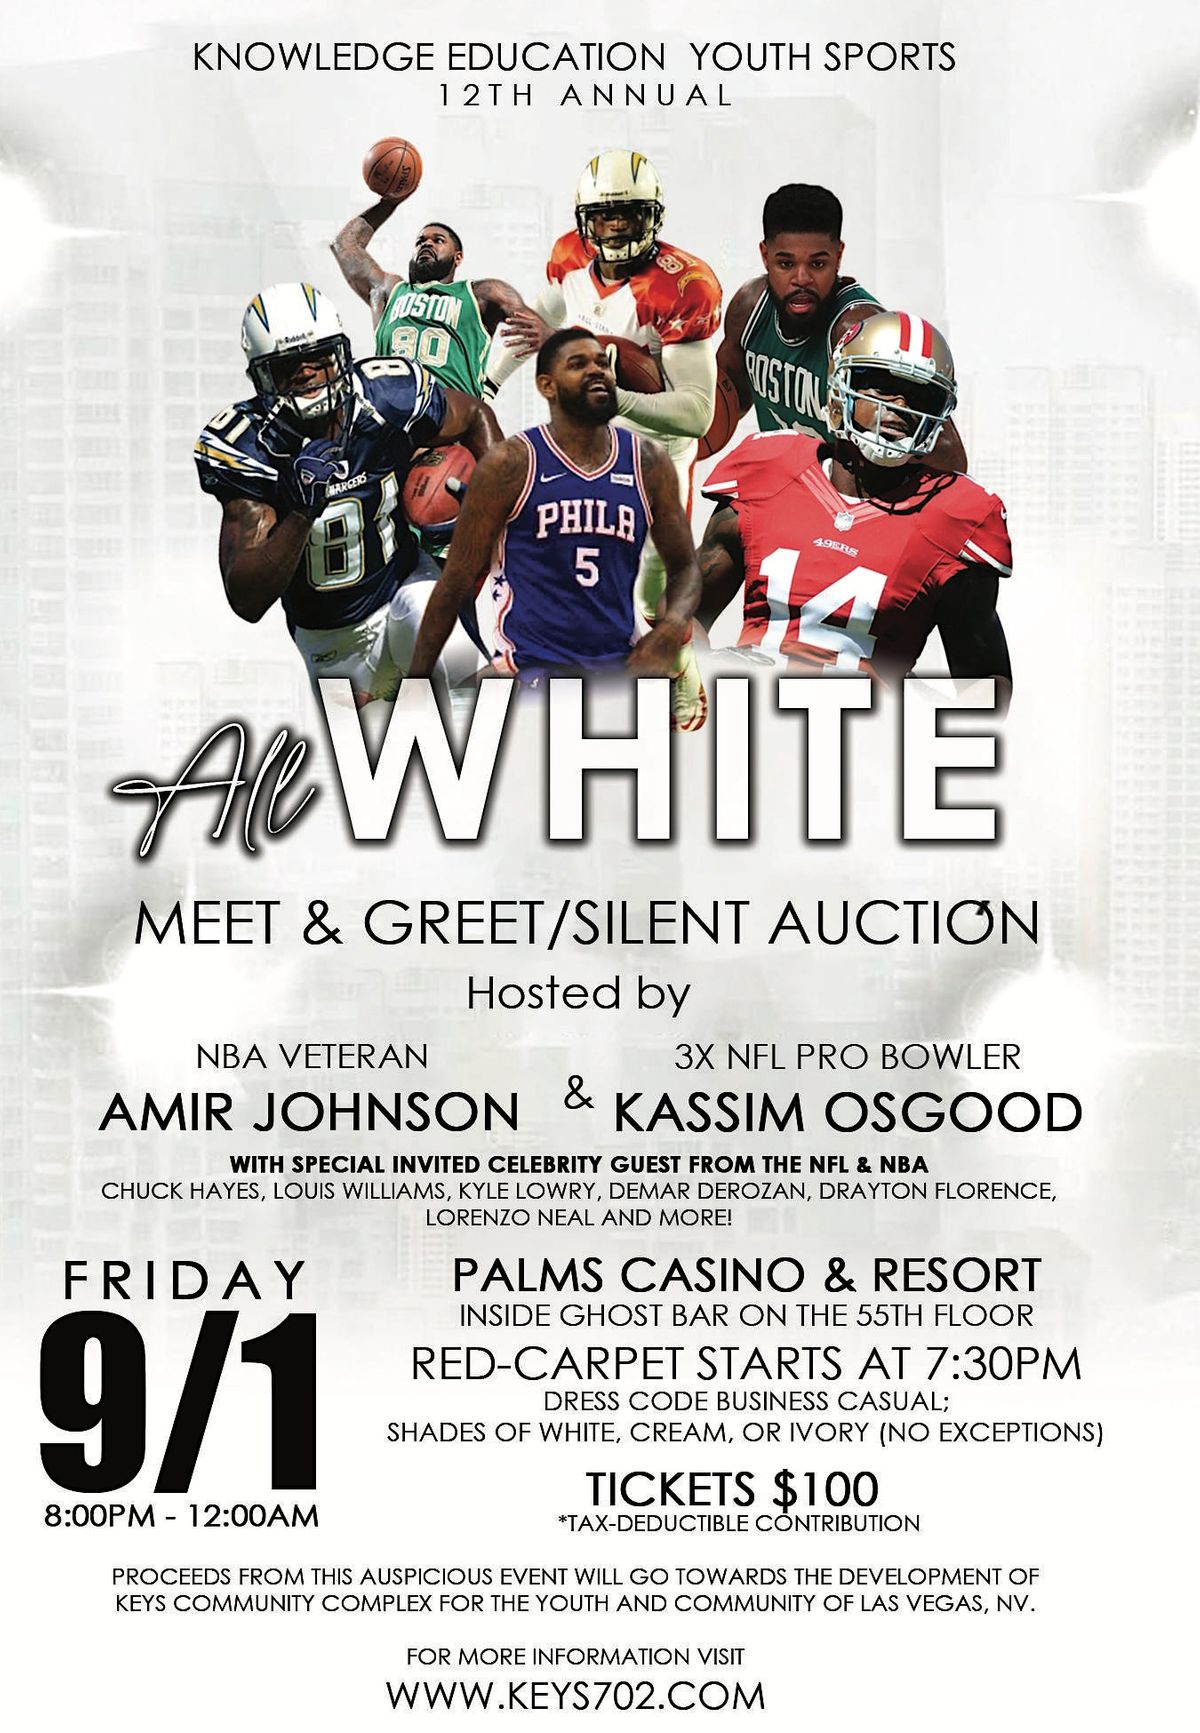 Celebrity "ALL WHITE" Meet & Greet\/Silent Auction